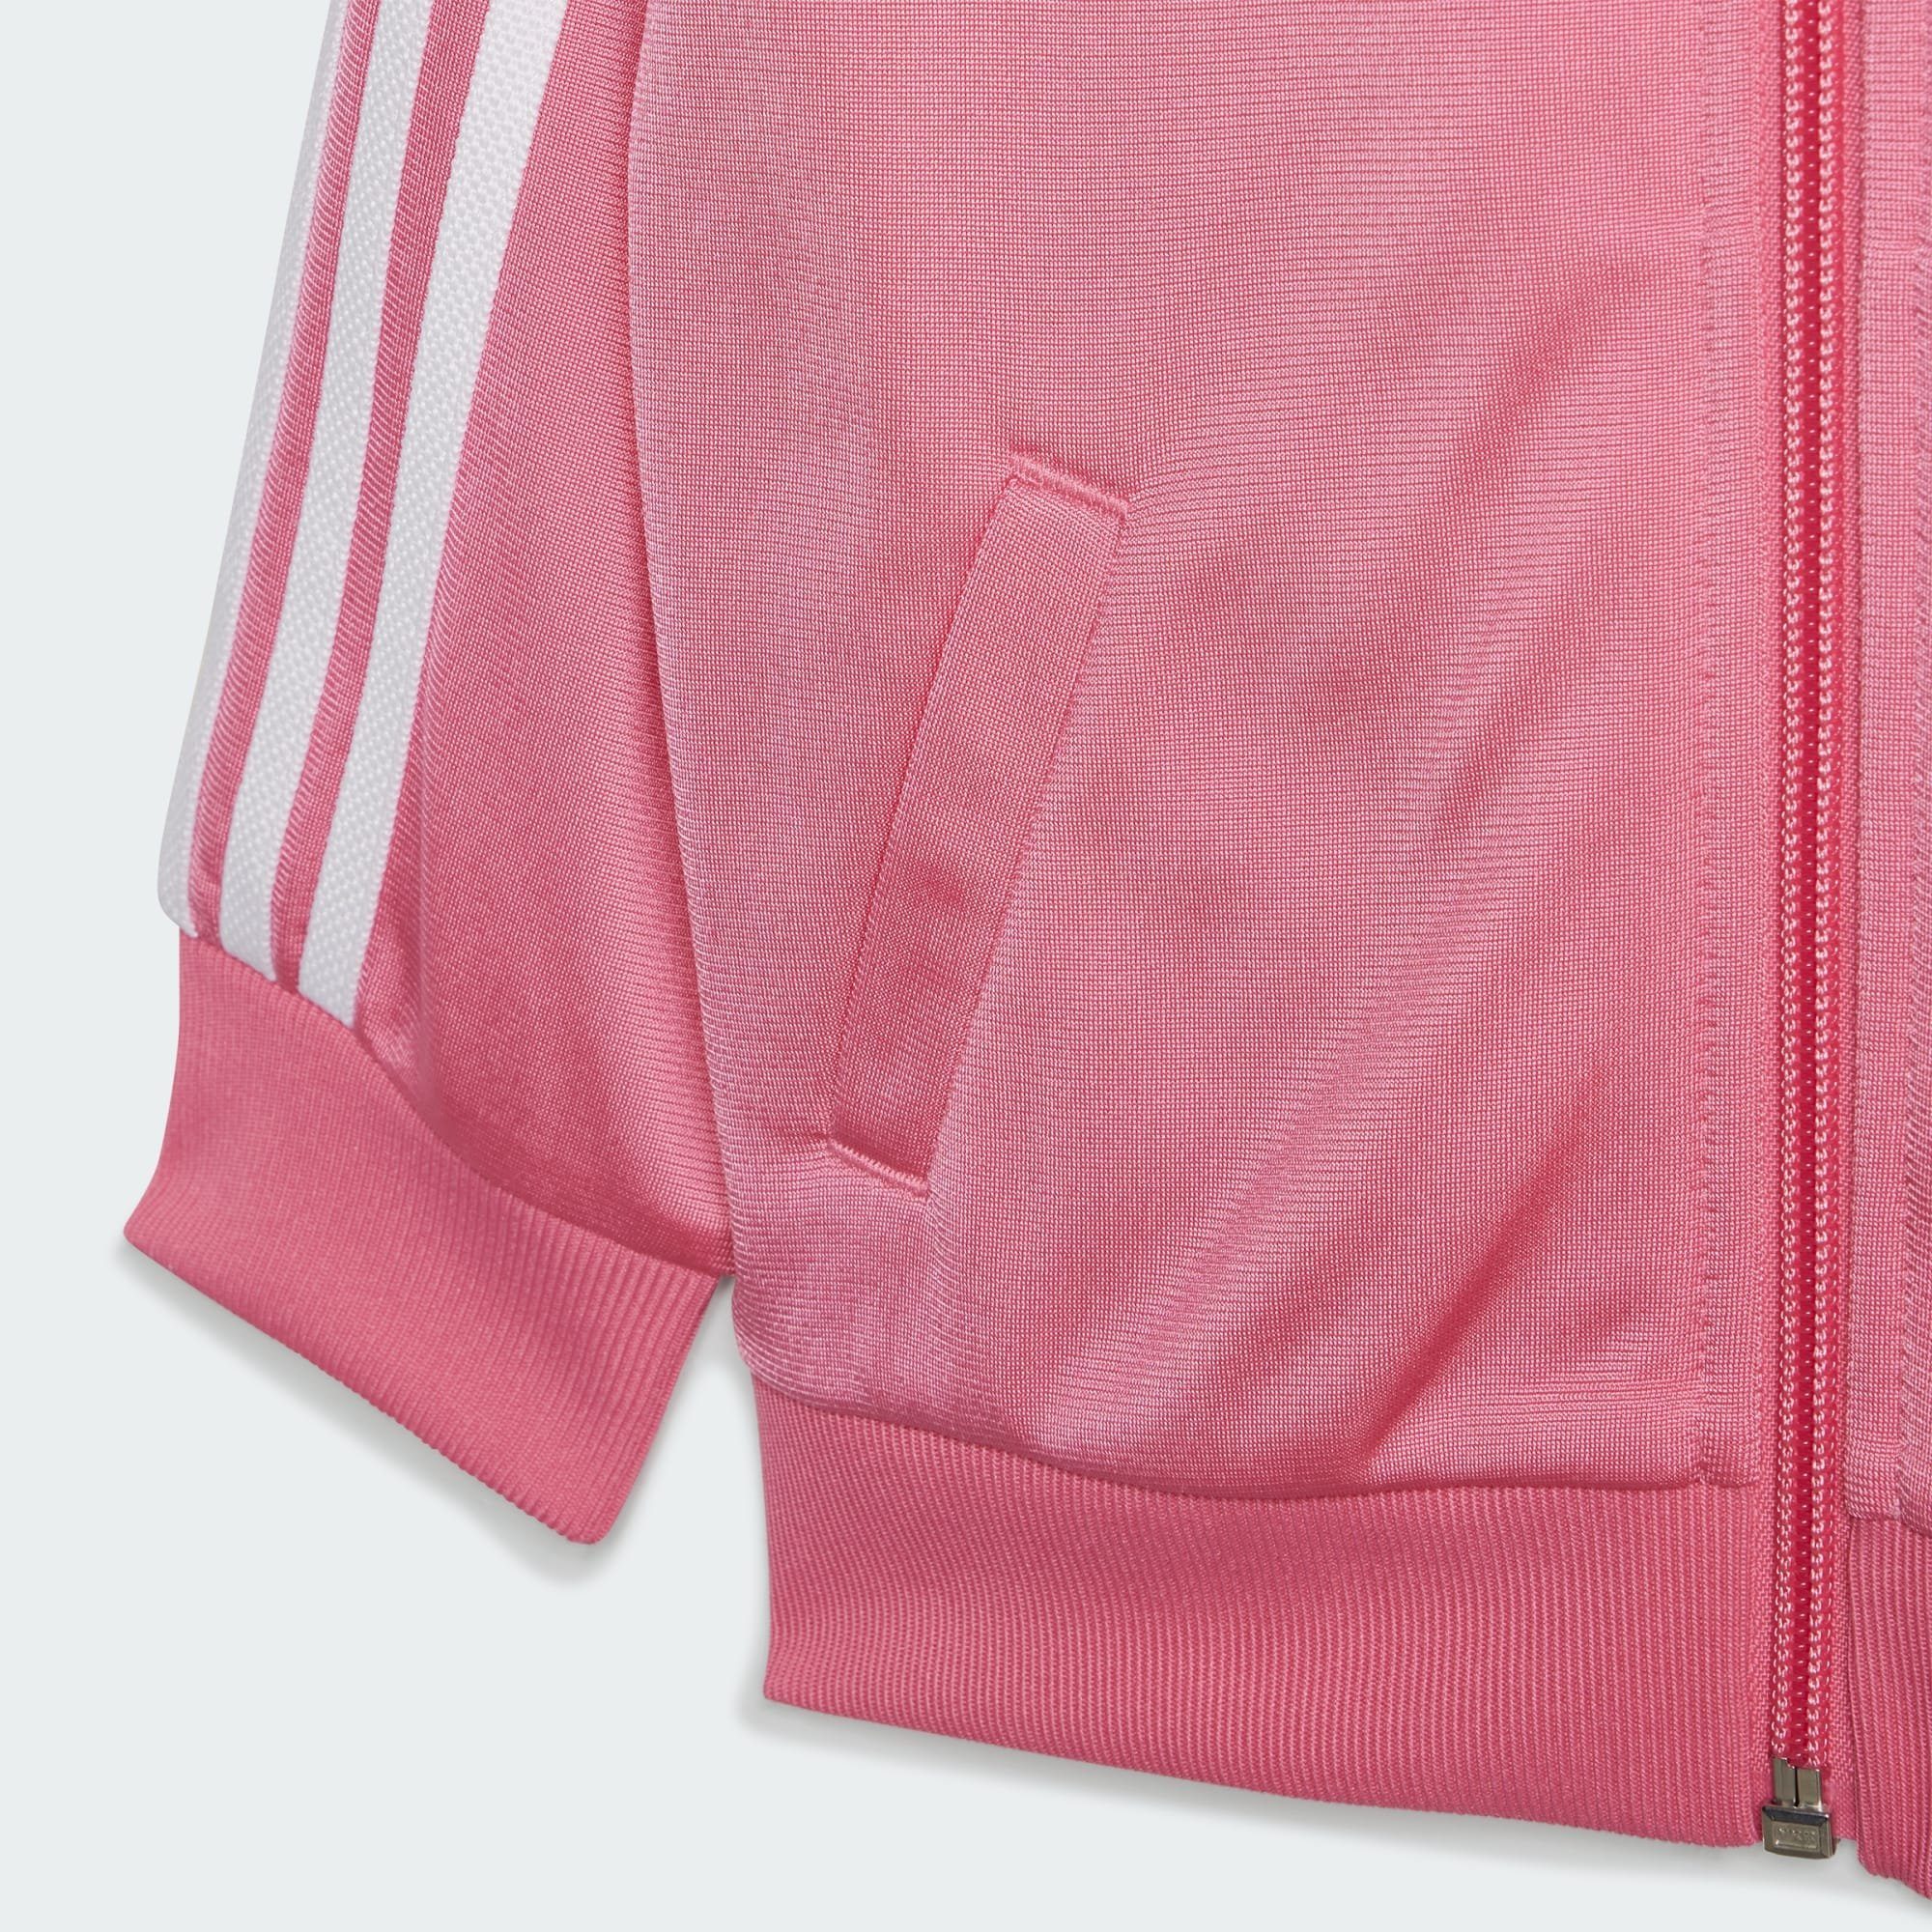 SST Sportanzug Fusion TRAININGSANZUG Pink adidas Originals ADICOLOR